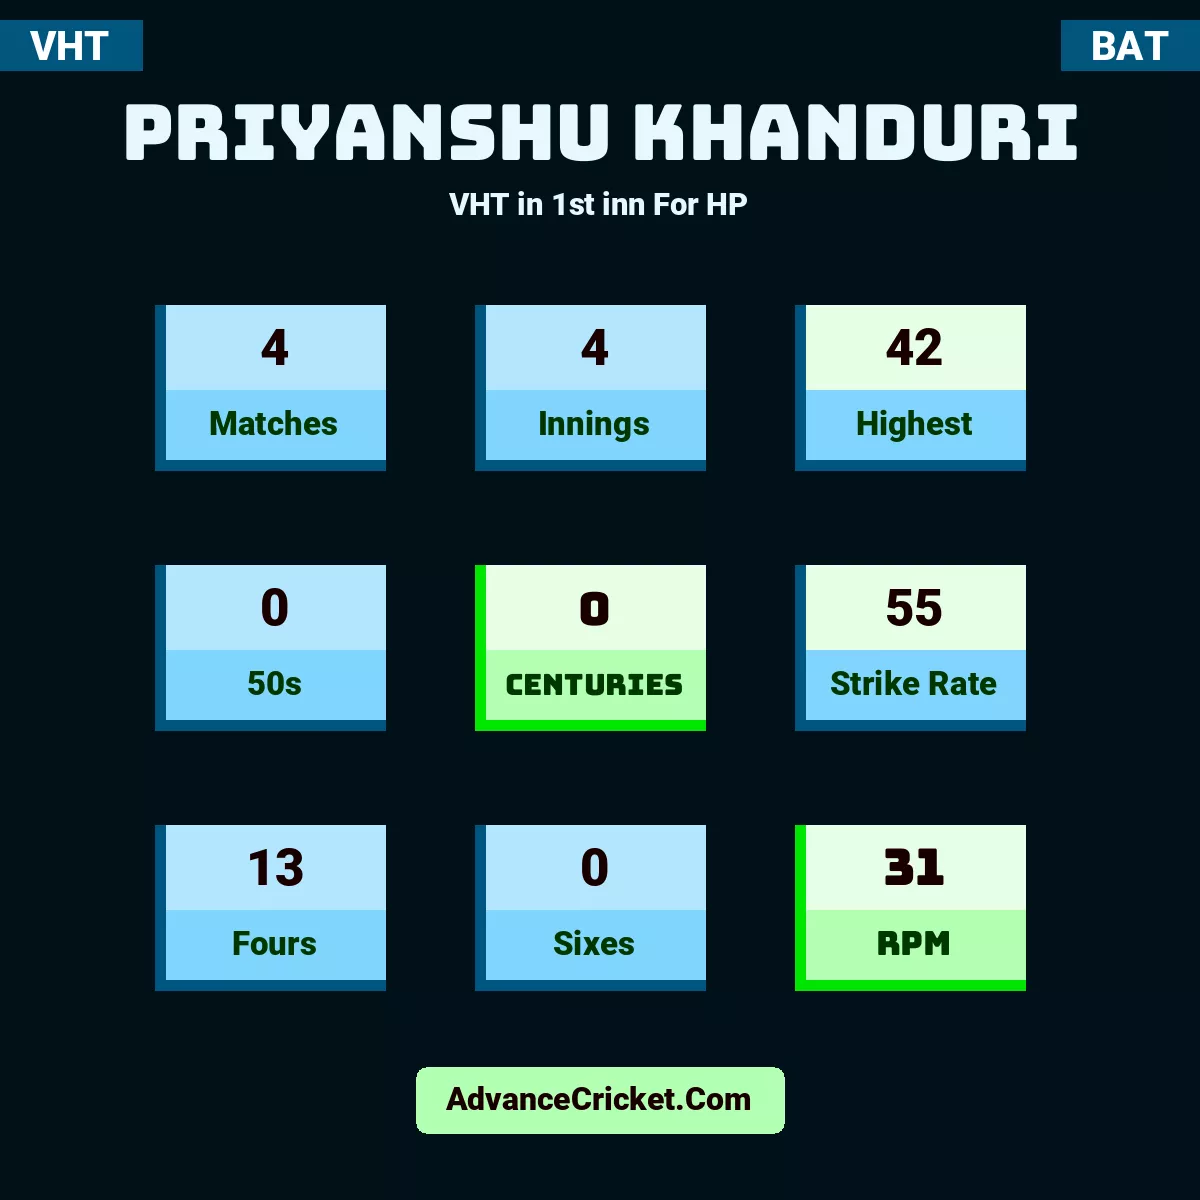 Priyanshu Khanduri VHT  in 1st inn For HP, Priyanshu Khanduri played 4 matches, scored 42 runs as highest, 0 half-centuries, and 0 centuries, with a strike rate of 55. P.Khanduri hit 13 fours and 0 sixes, with an RPM of 31.